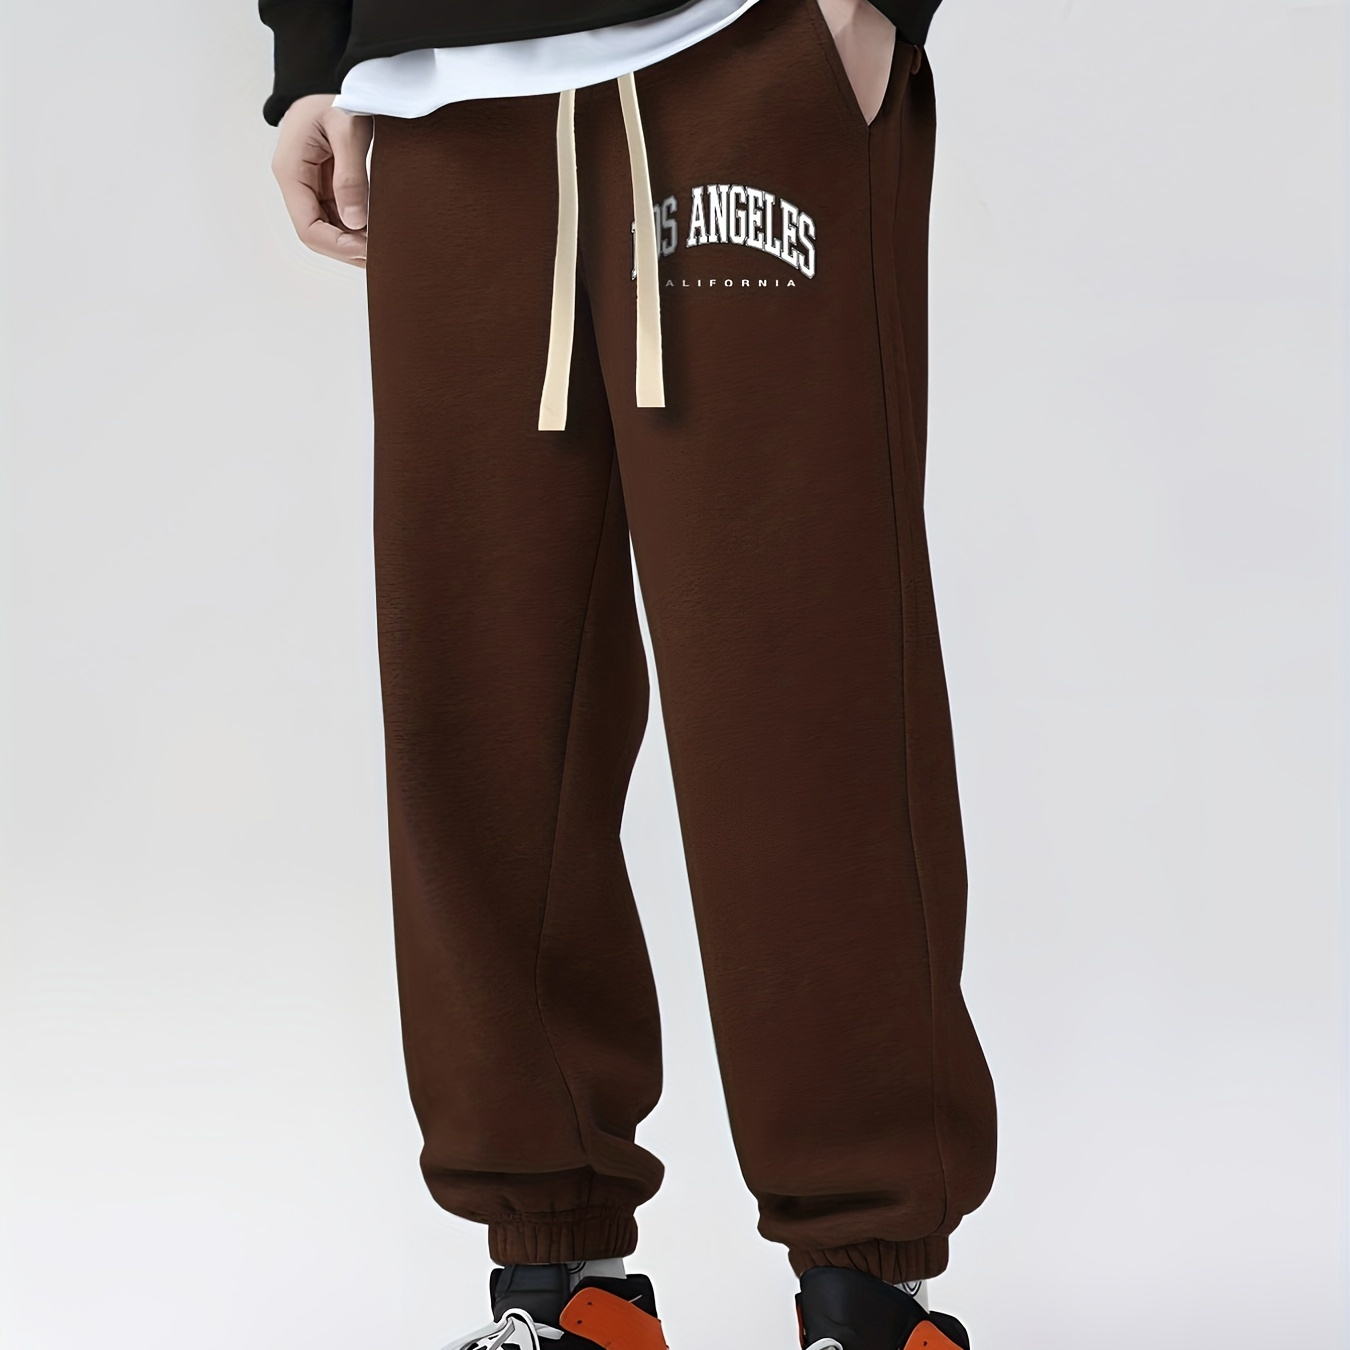 

Los Angeles Pattern, Men's Drawstring Sweatpants, Pocket Casual Comfy Jogger Pants, Mens Clothing For Autumn Winter